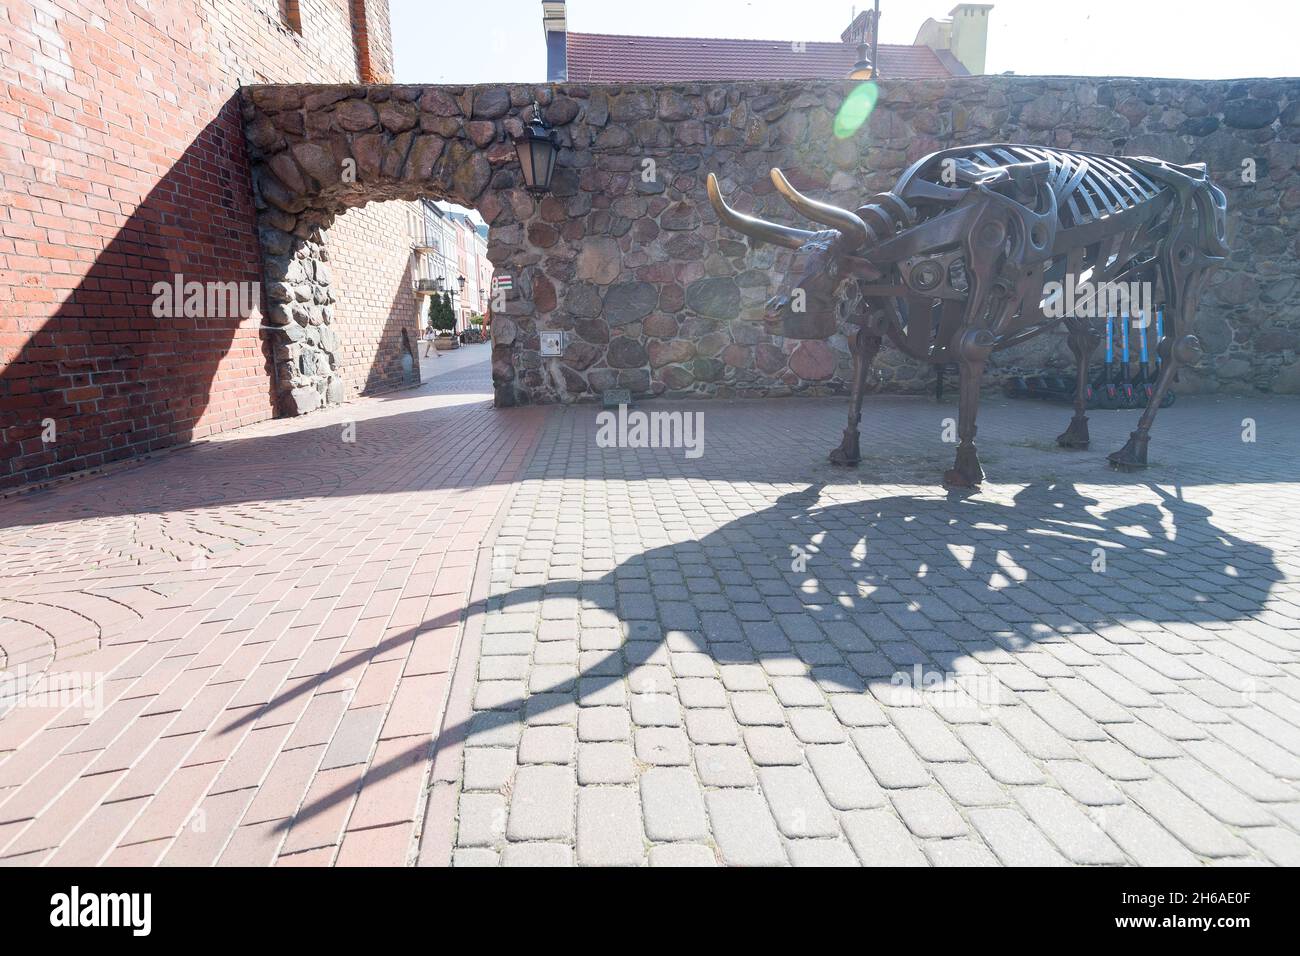 The Aurochs sculpture in Chojnice, Poland. September 9th 2021 © Wojciech Strozyk / Alamy Stock Photo *** Local Caption *** Stock Photo